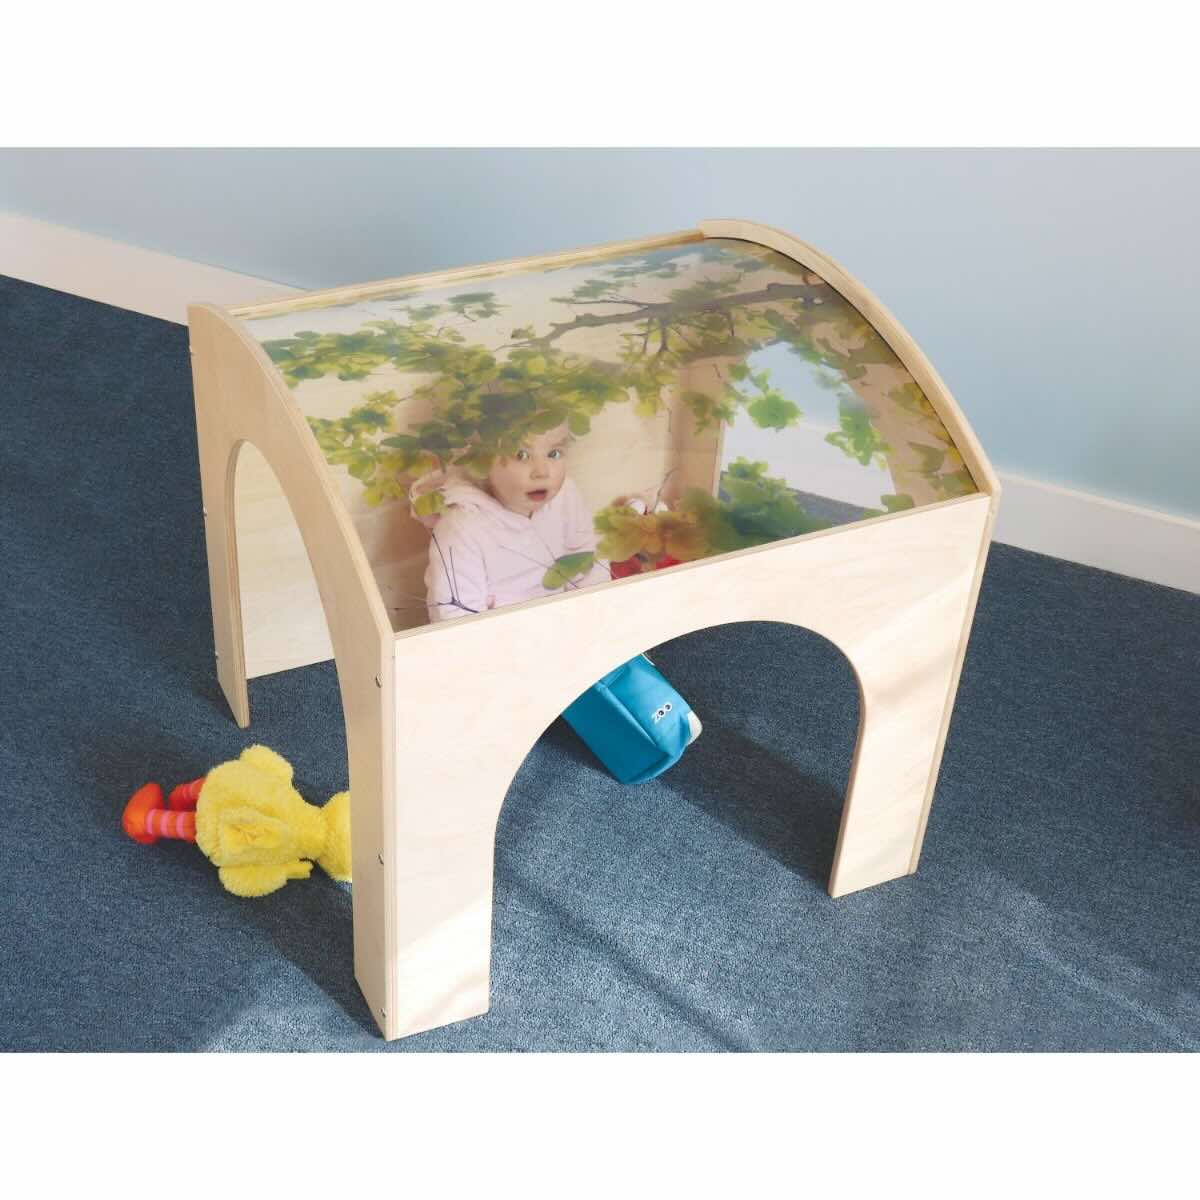 Cozy Corner for kids in a sensory room